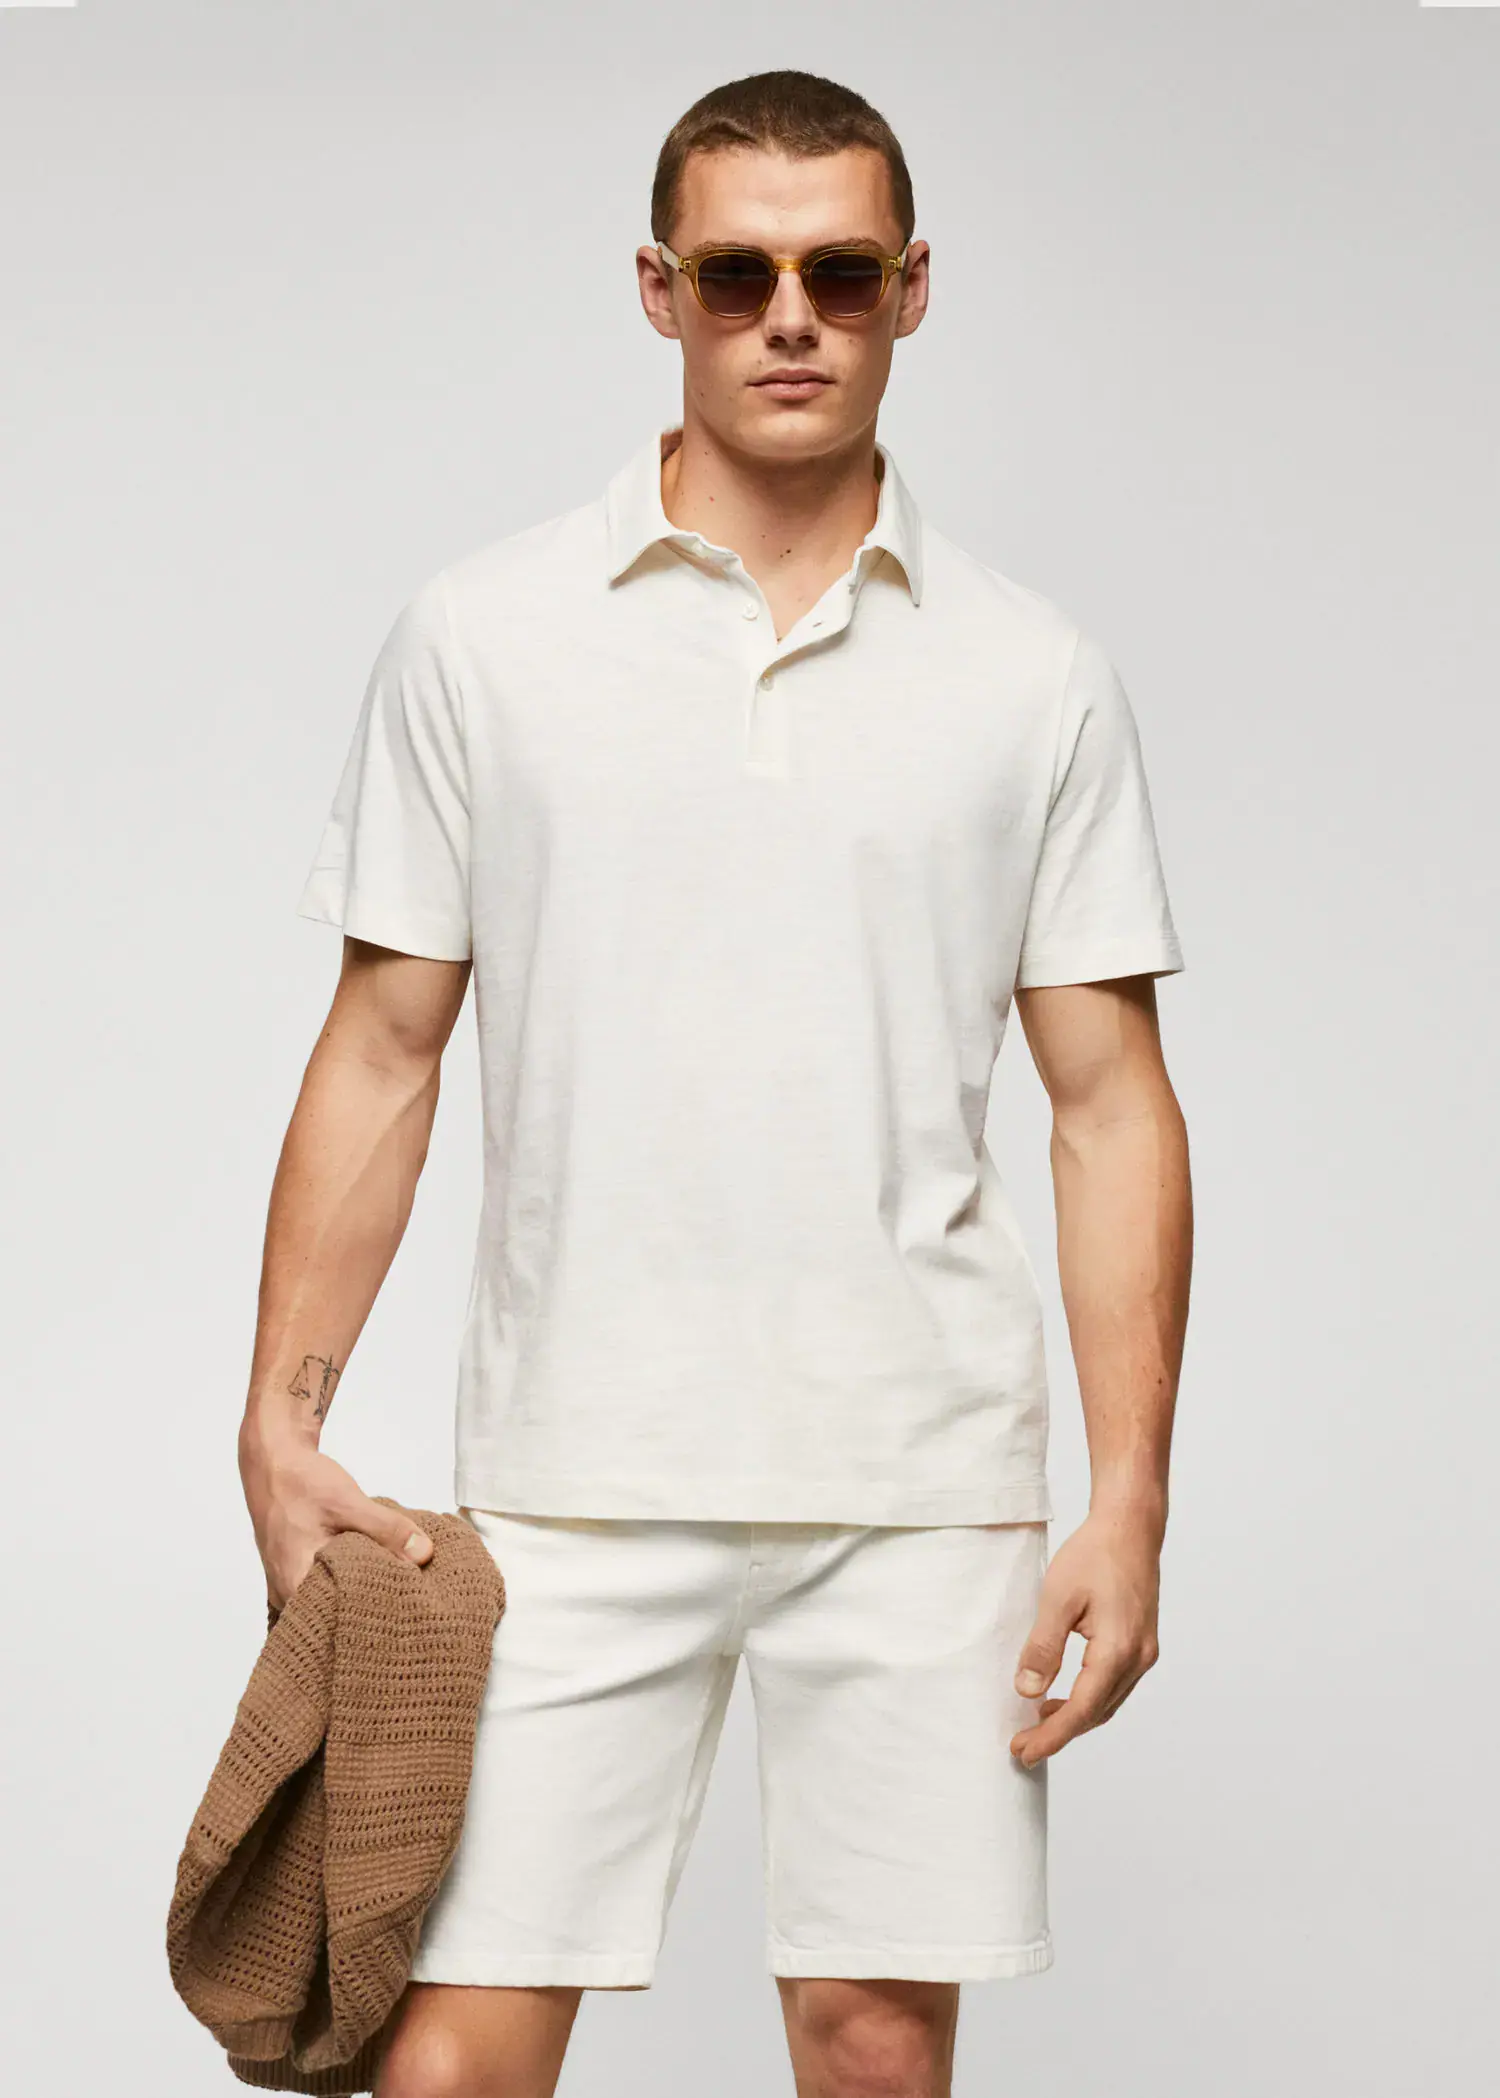 Mango 100% cotton basic polo shirt . a man in a white shirt holding a towel. 